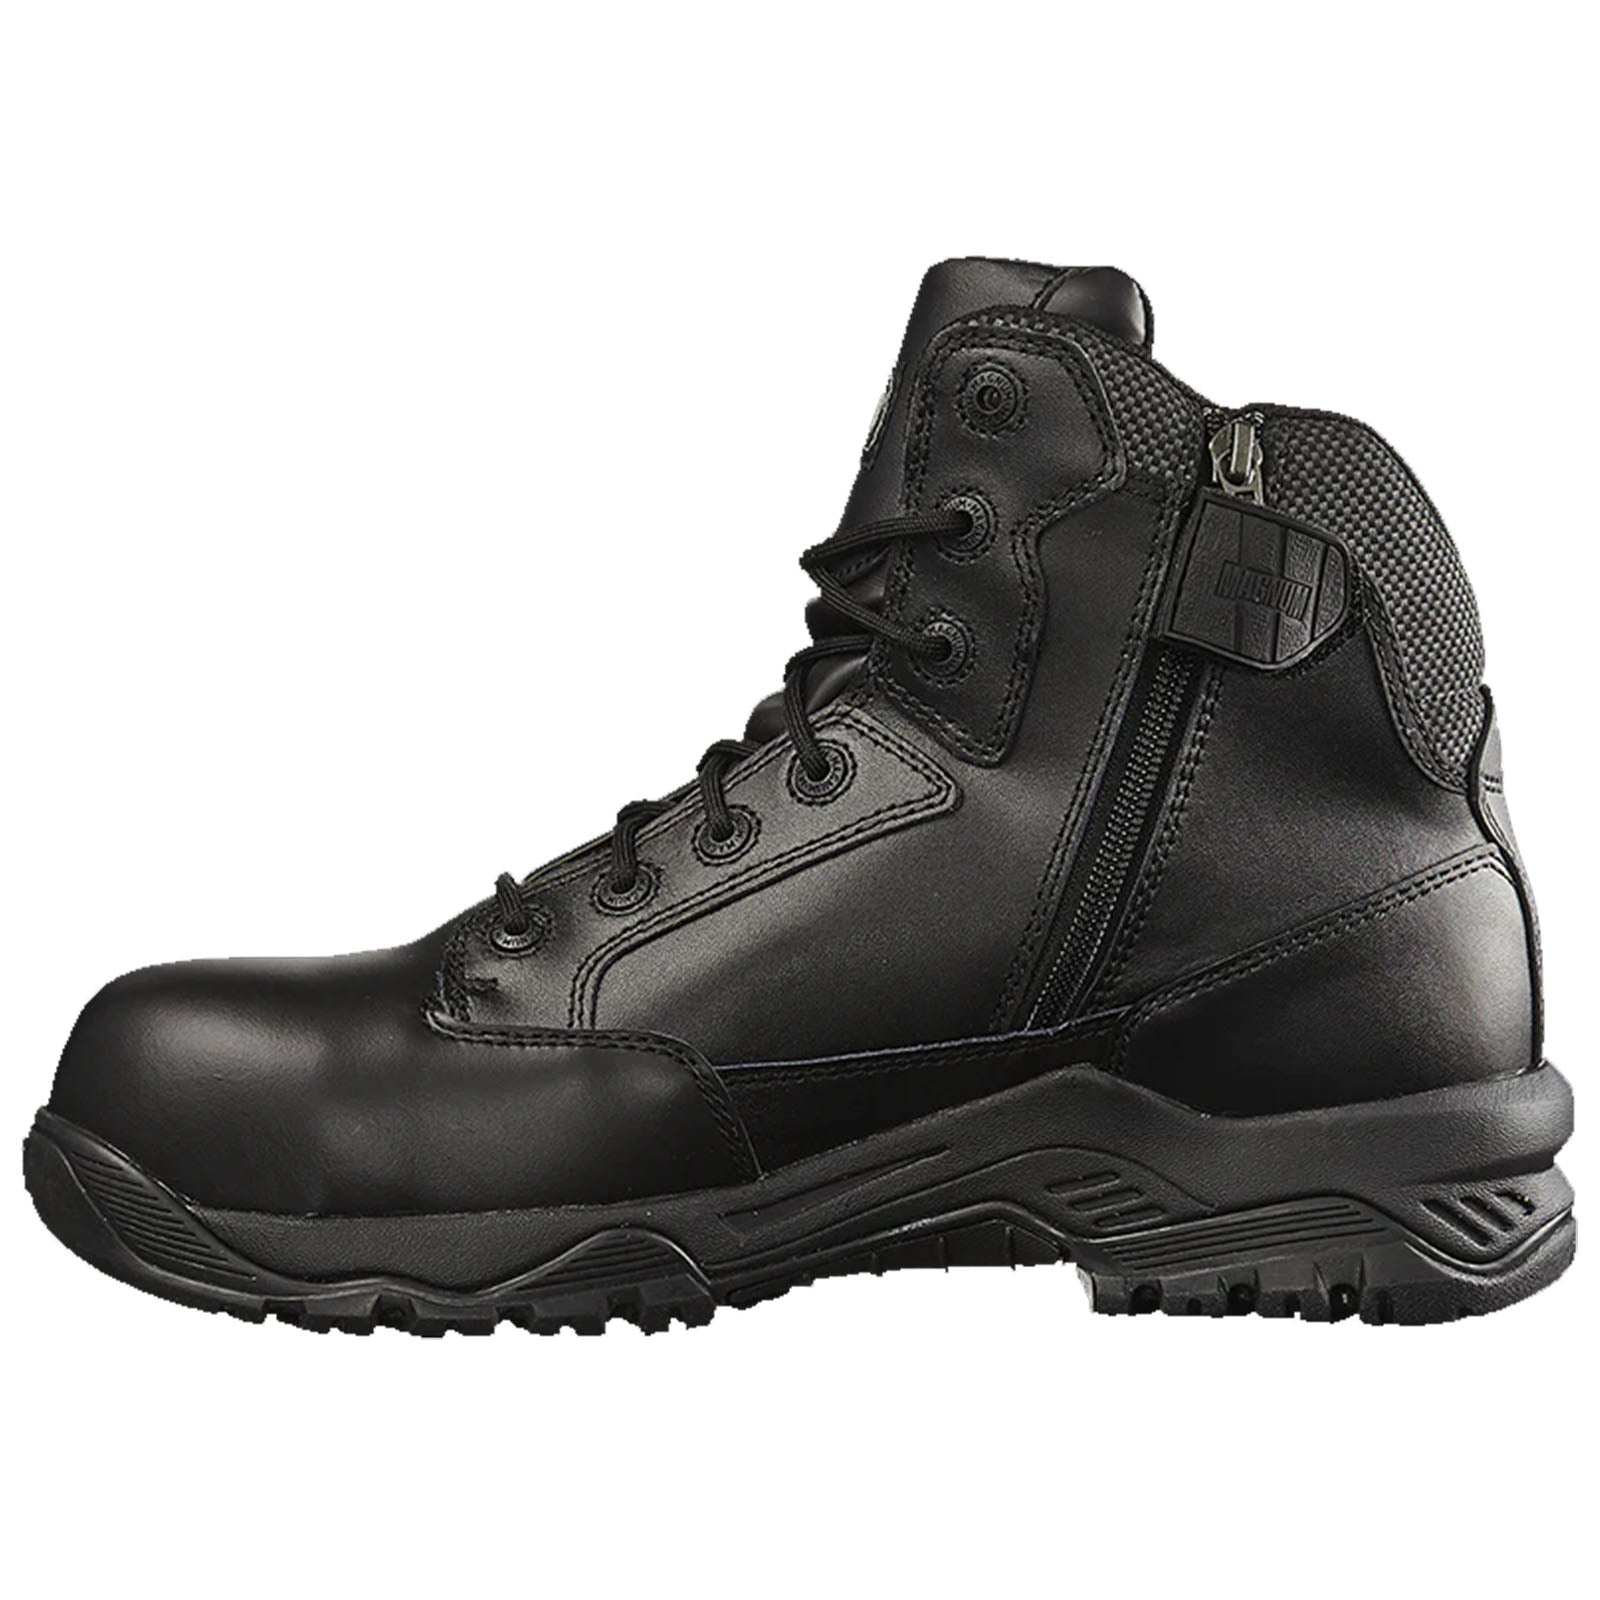 Magnum Unisex Strike Force 6.0 Side-Zip S3 Safety Boots